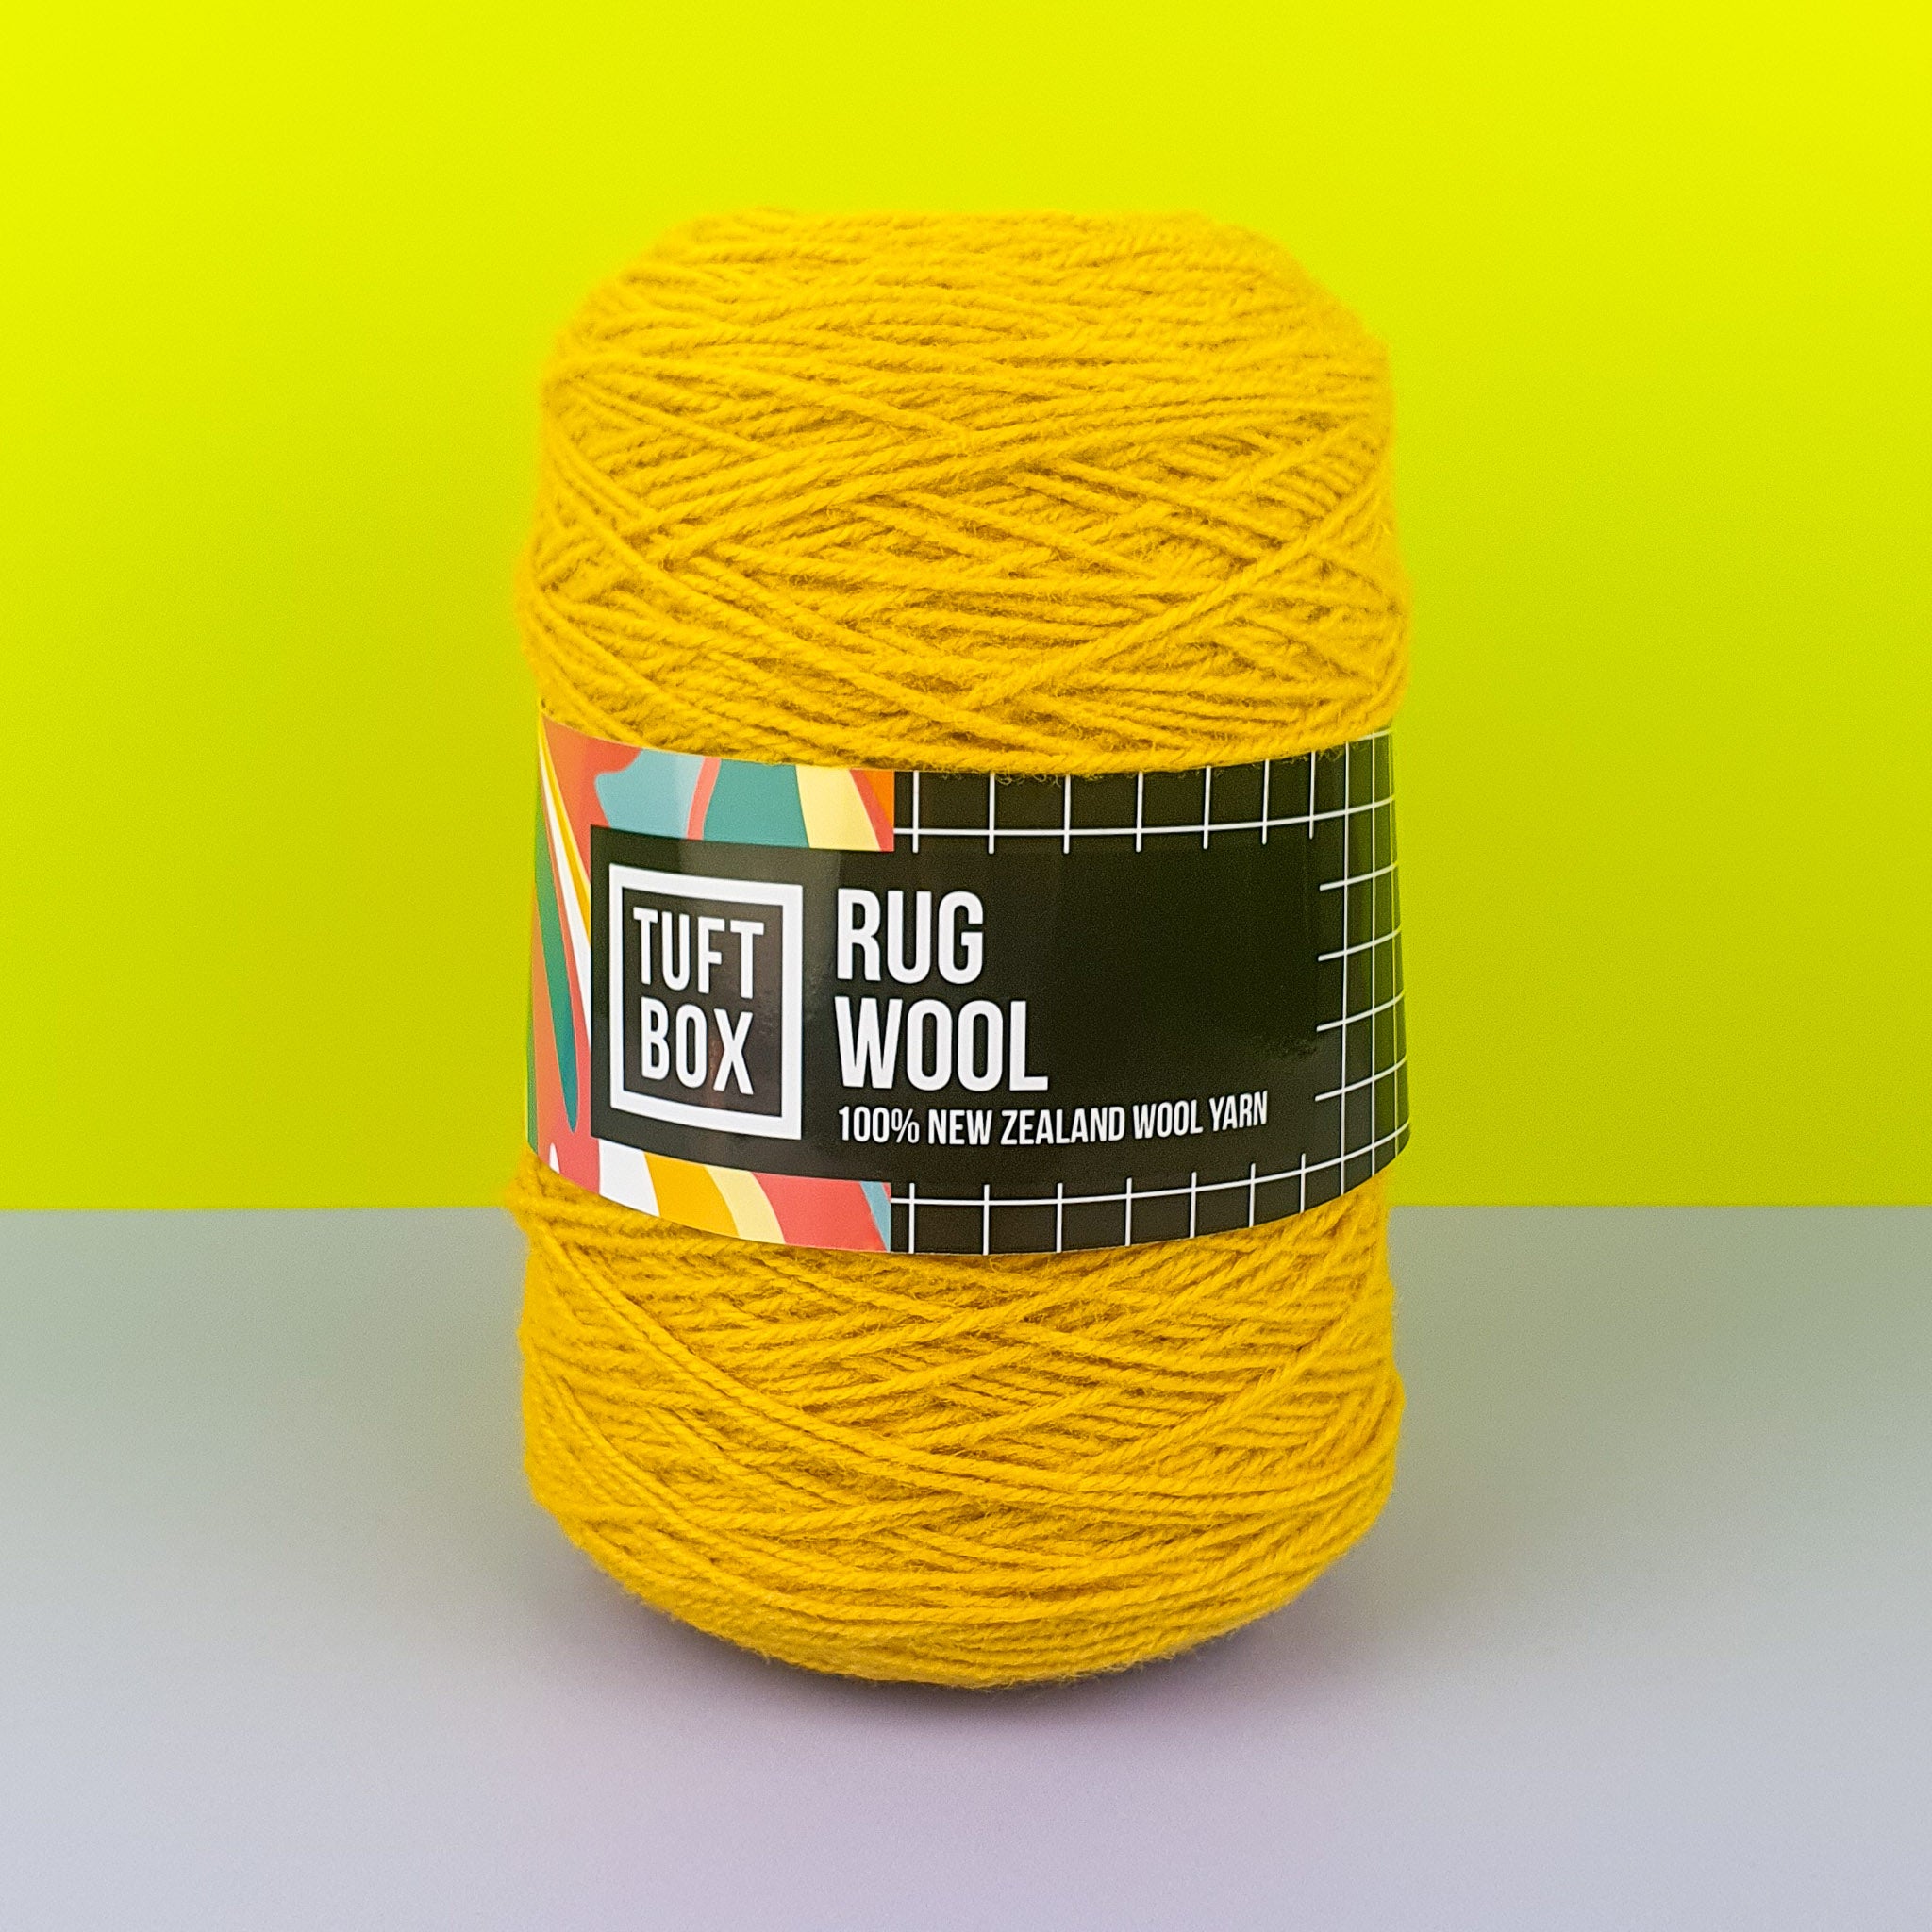 Tuftbox Rug Wool Cone Amber